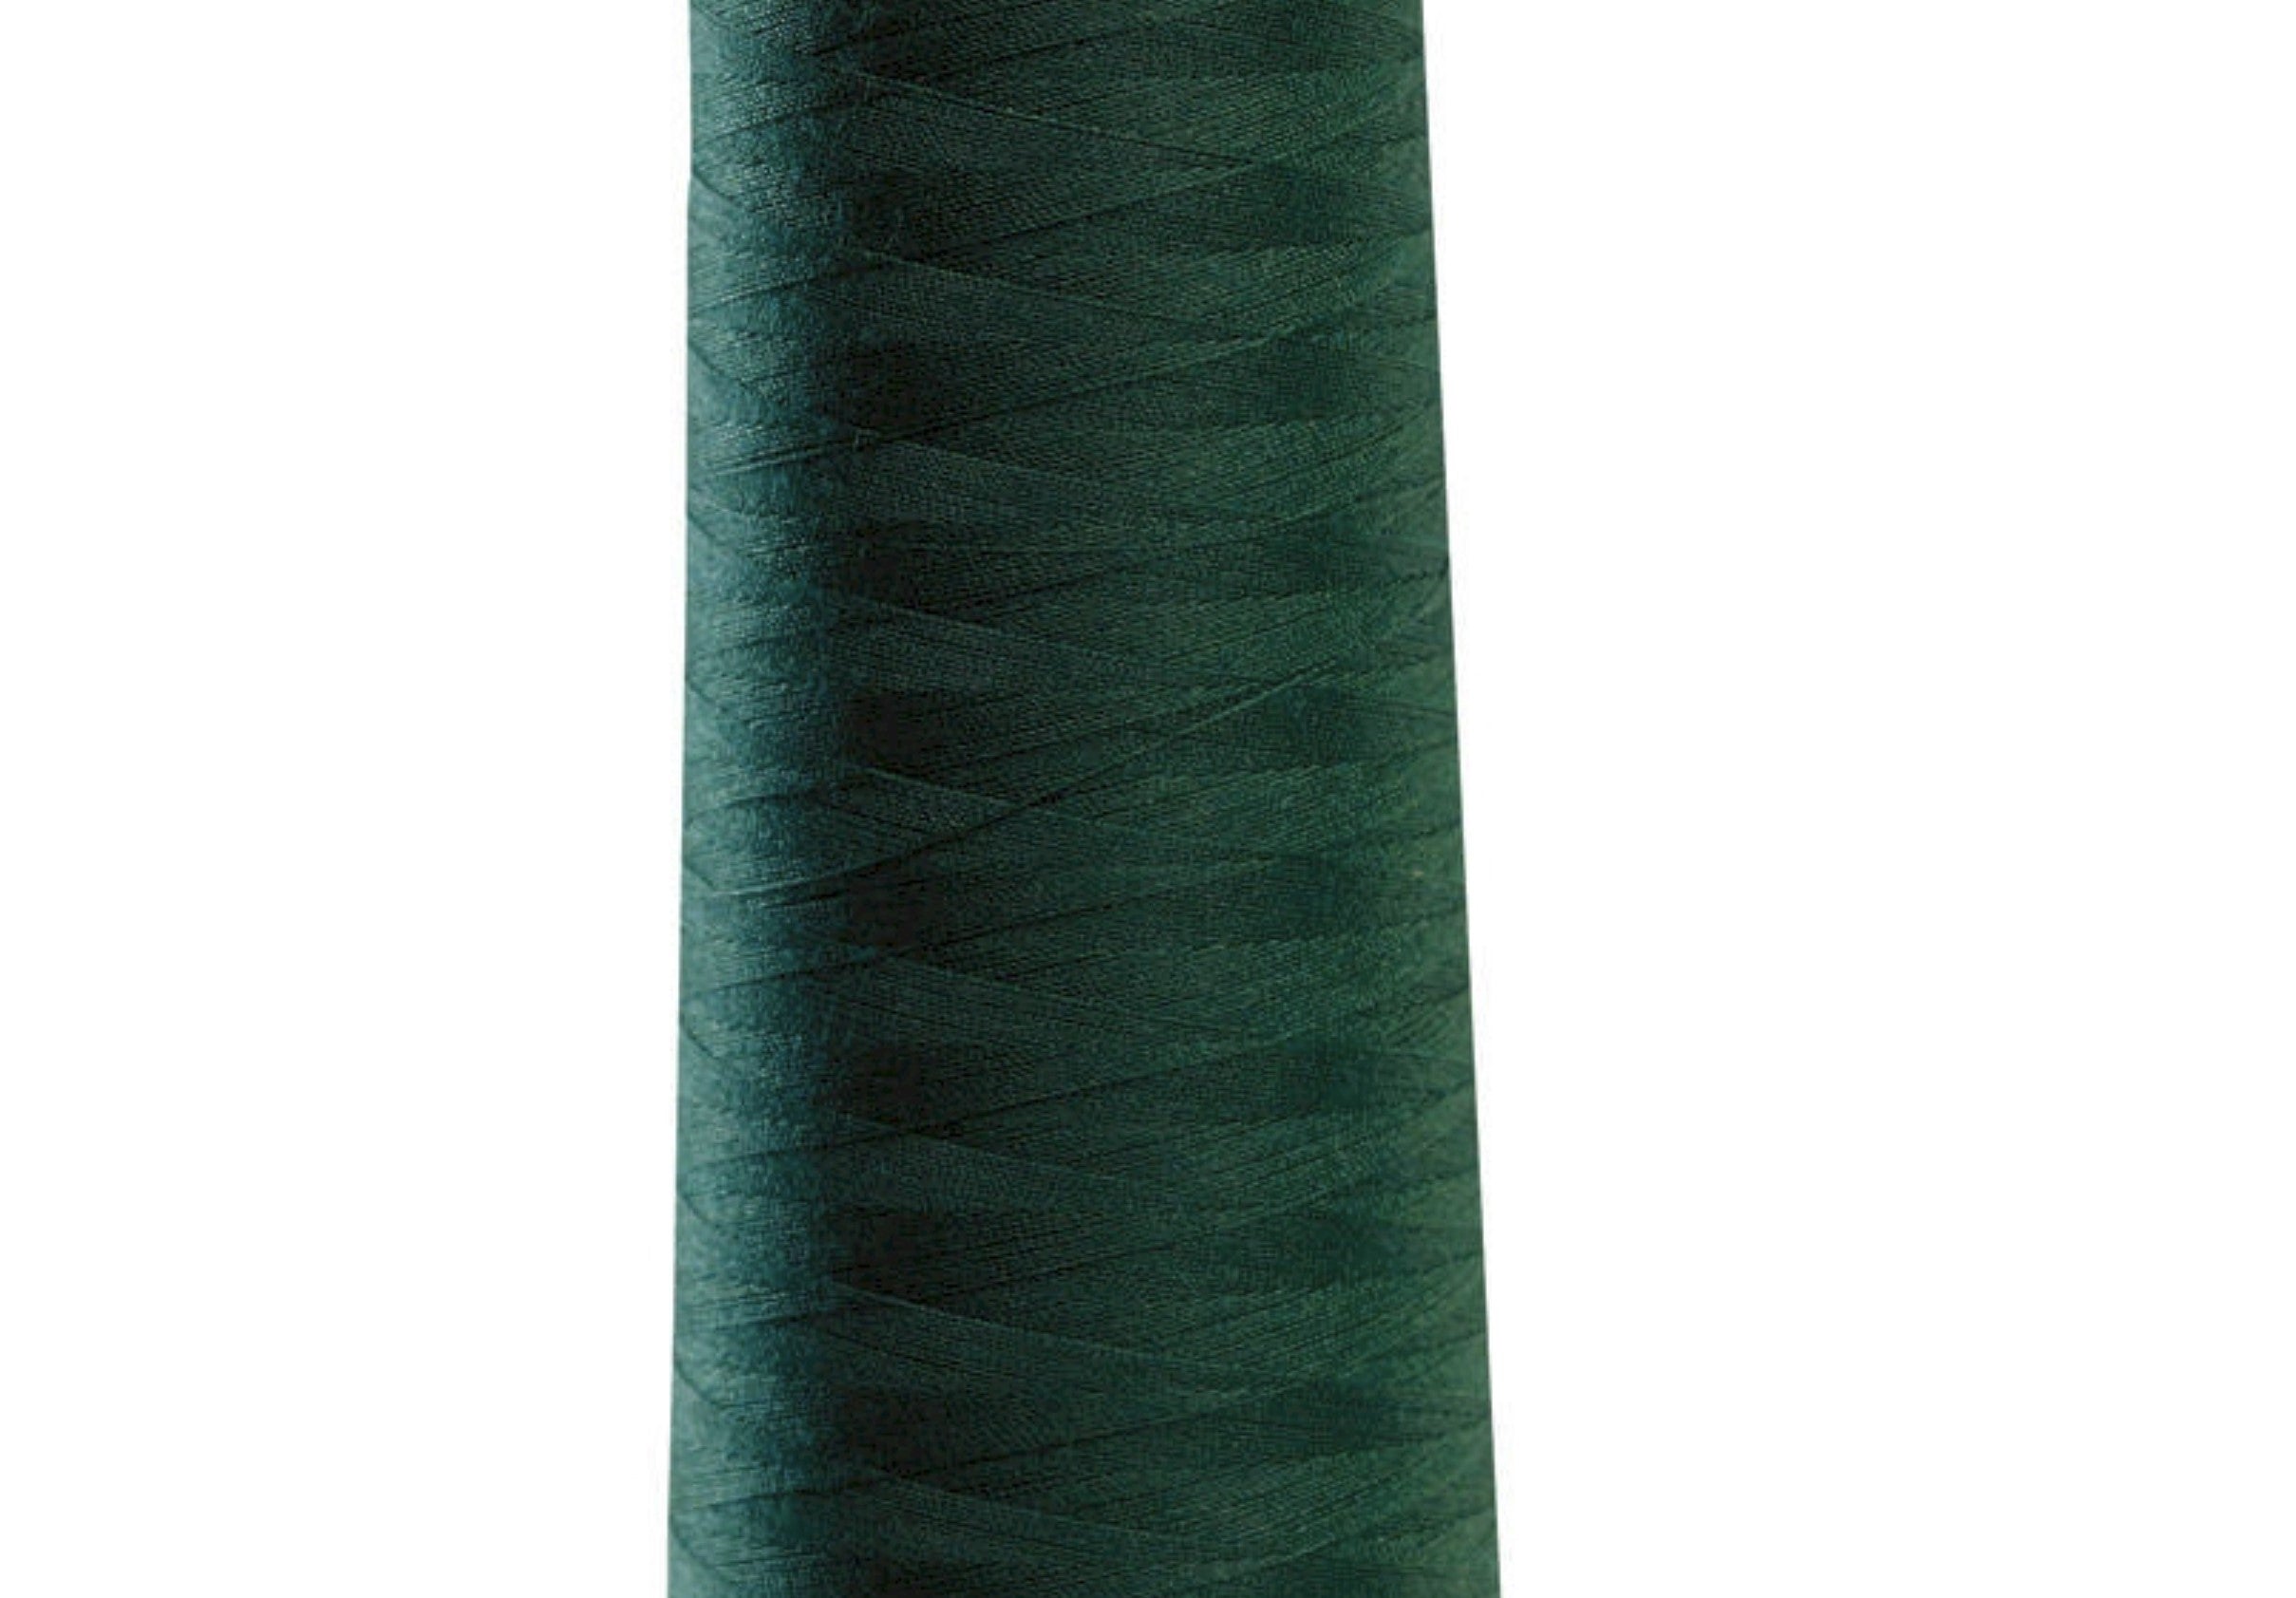 Emerald Green Color, Aerolock Premium Serger Thread, Ref. 8473 by Madeira®